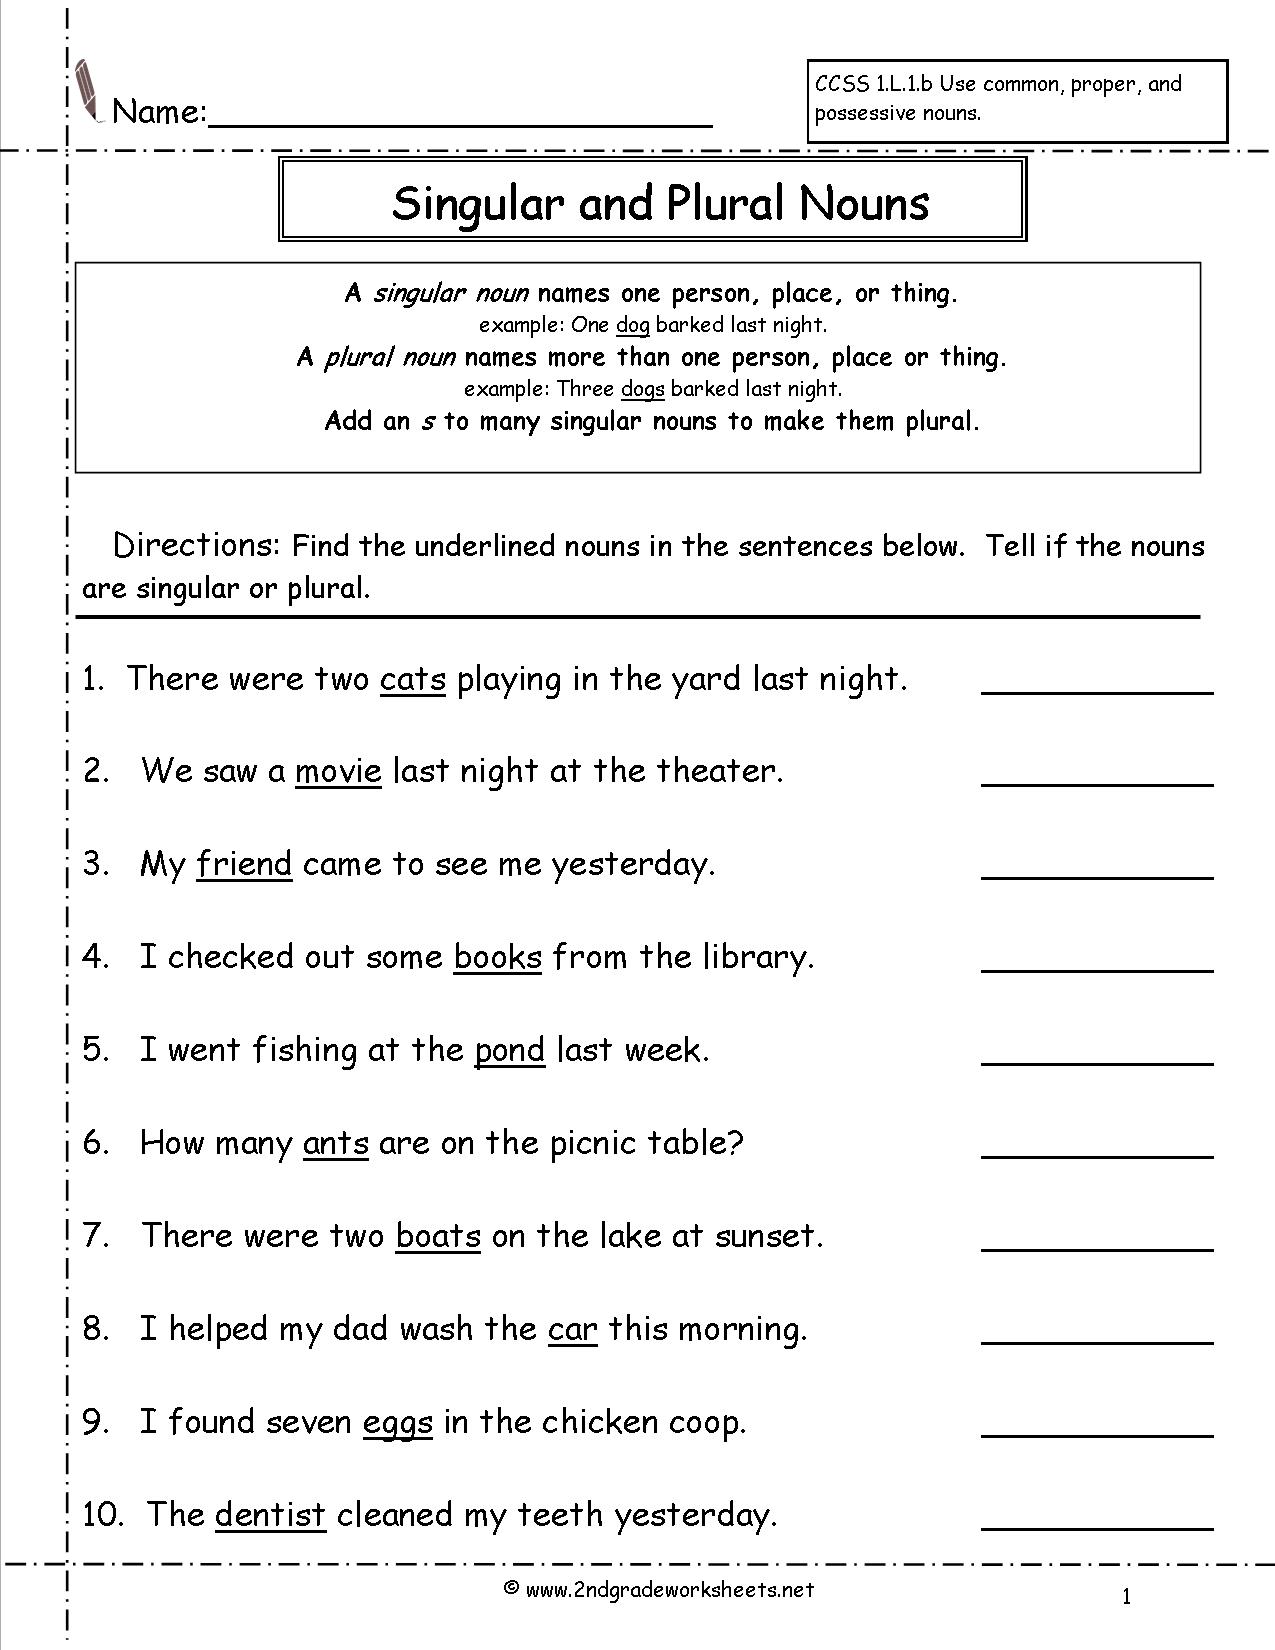 Worksheet For Singular Plural